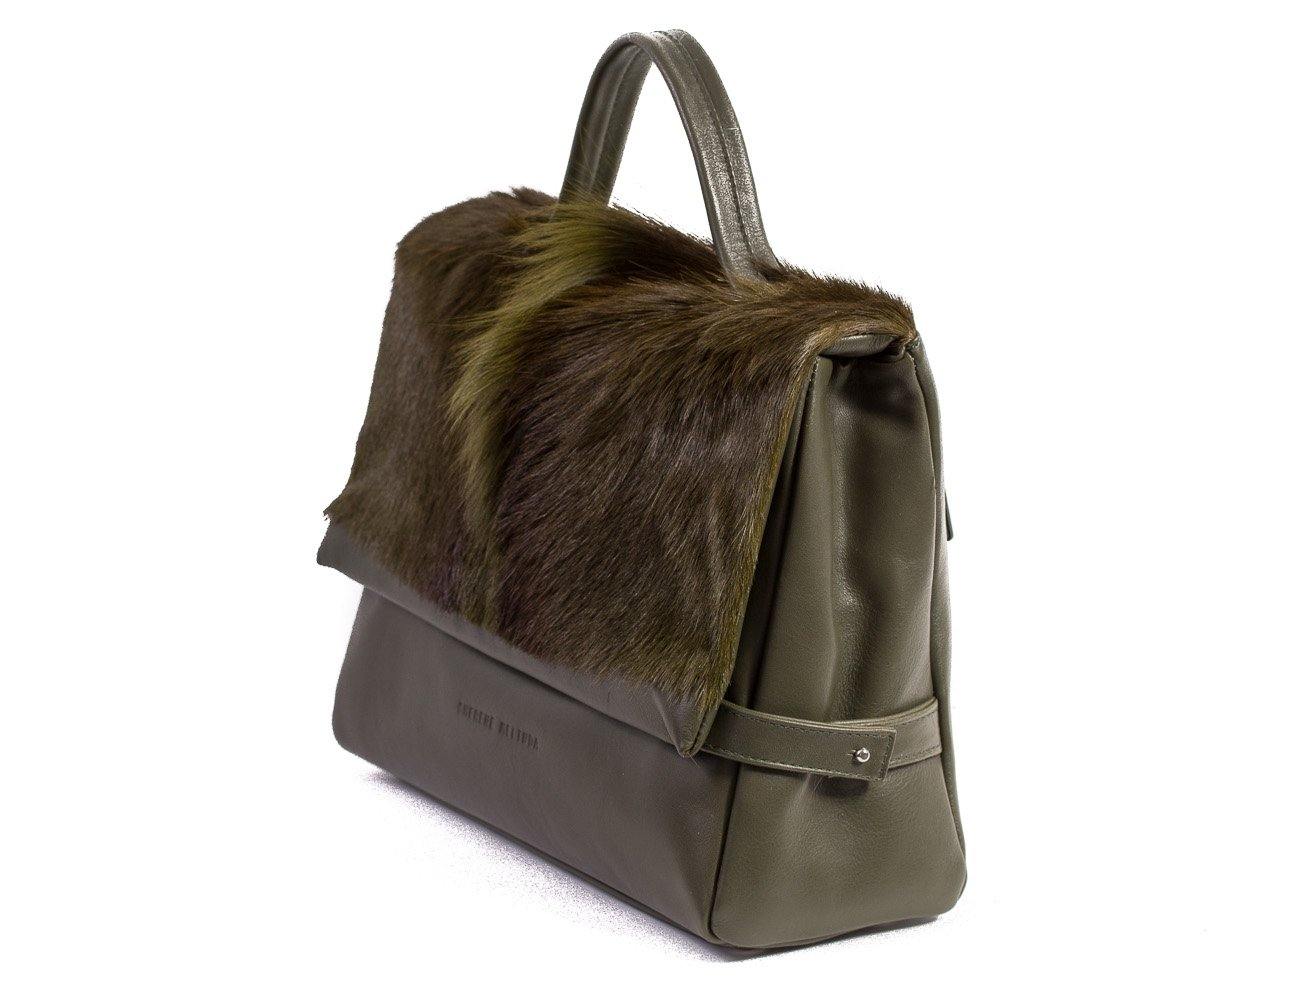 sherene melinda springbok hair-on-hide green leather smith tote bag Fan side angle